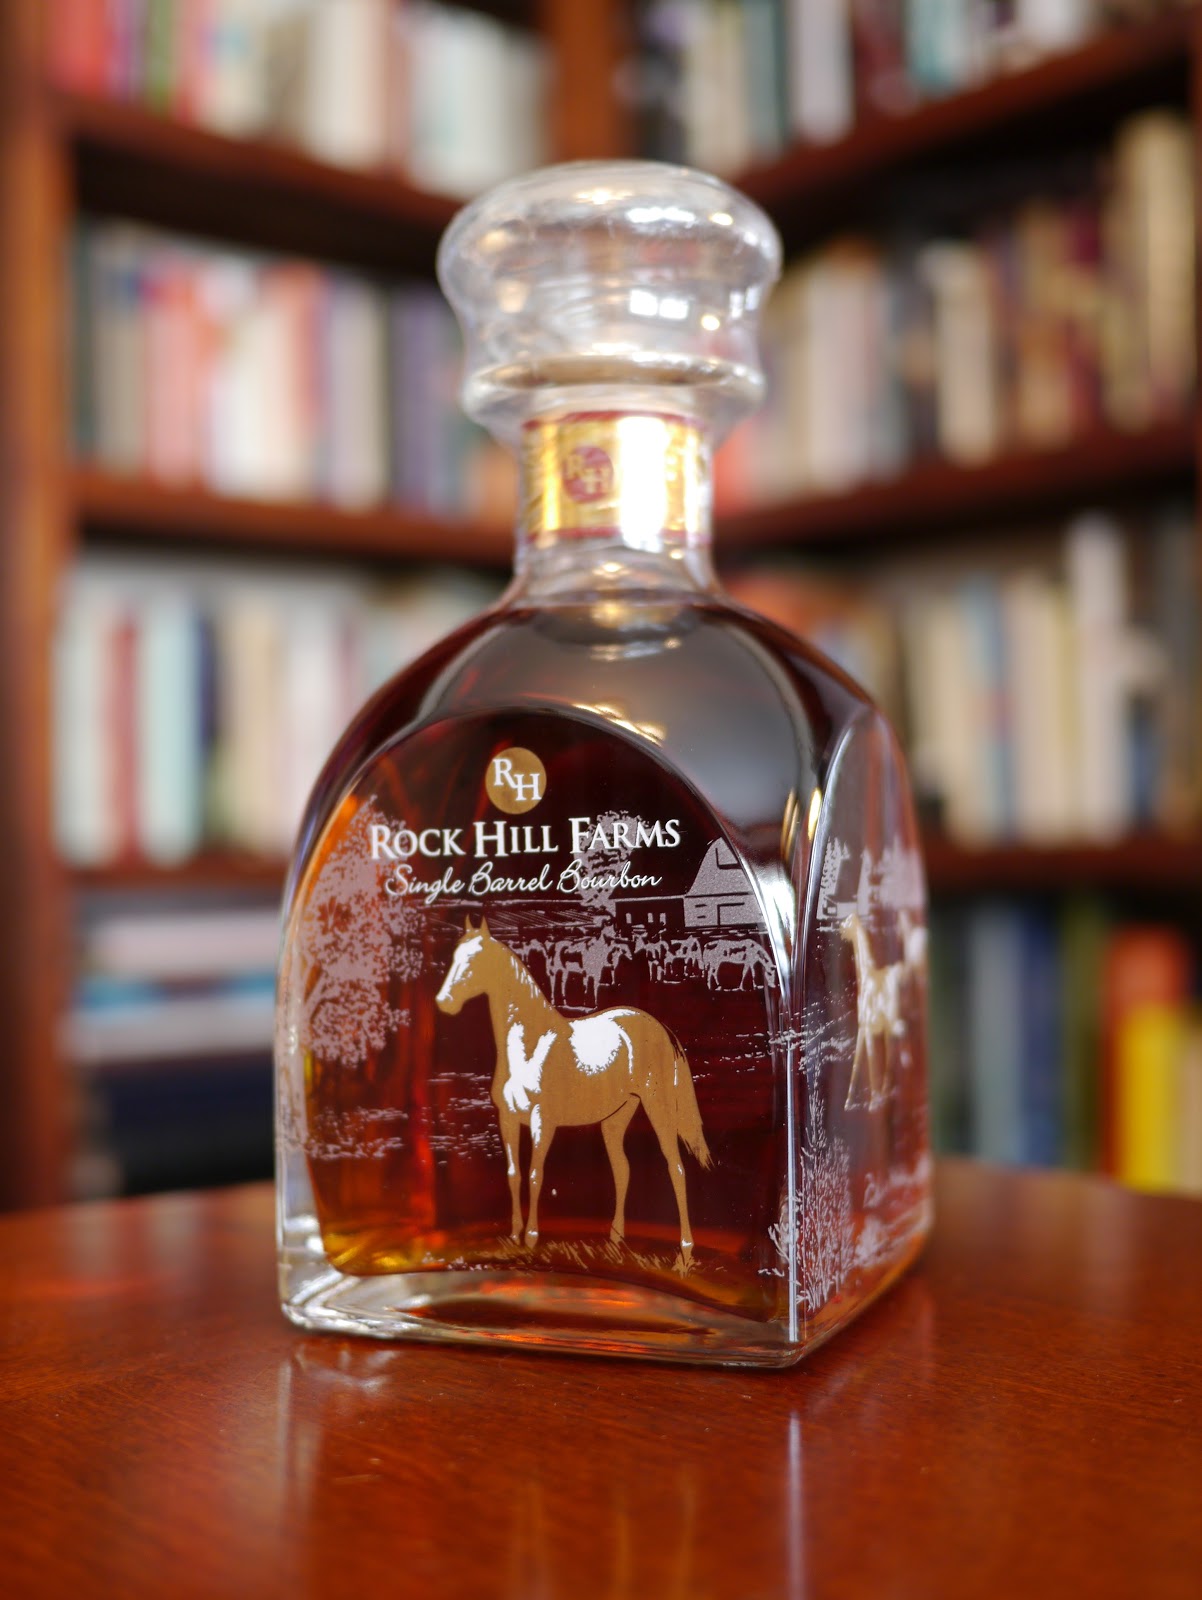 The Rock Hill Farms Single Barrel Bourbon (750 ml cupola bottle) The